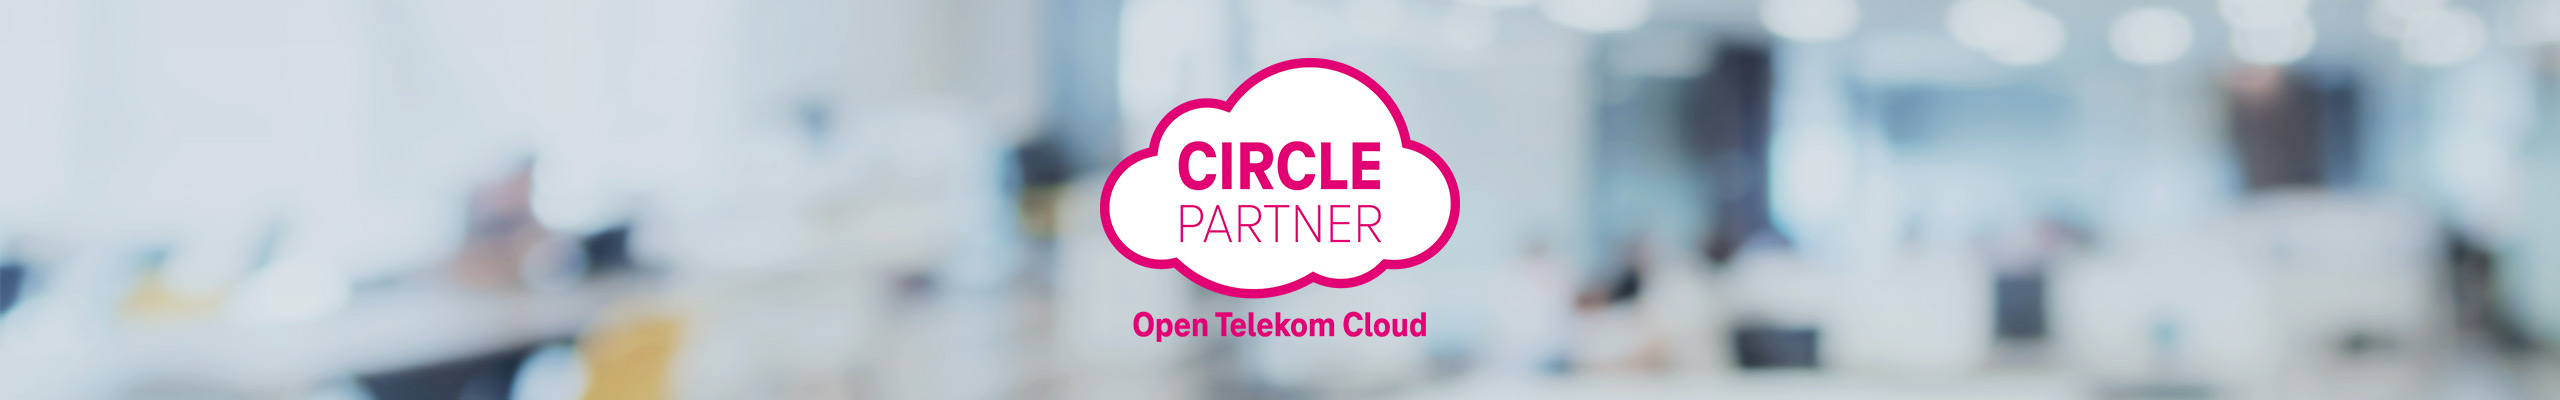 Circle Partner logo